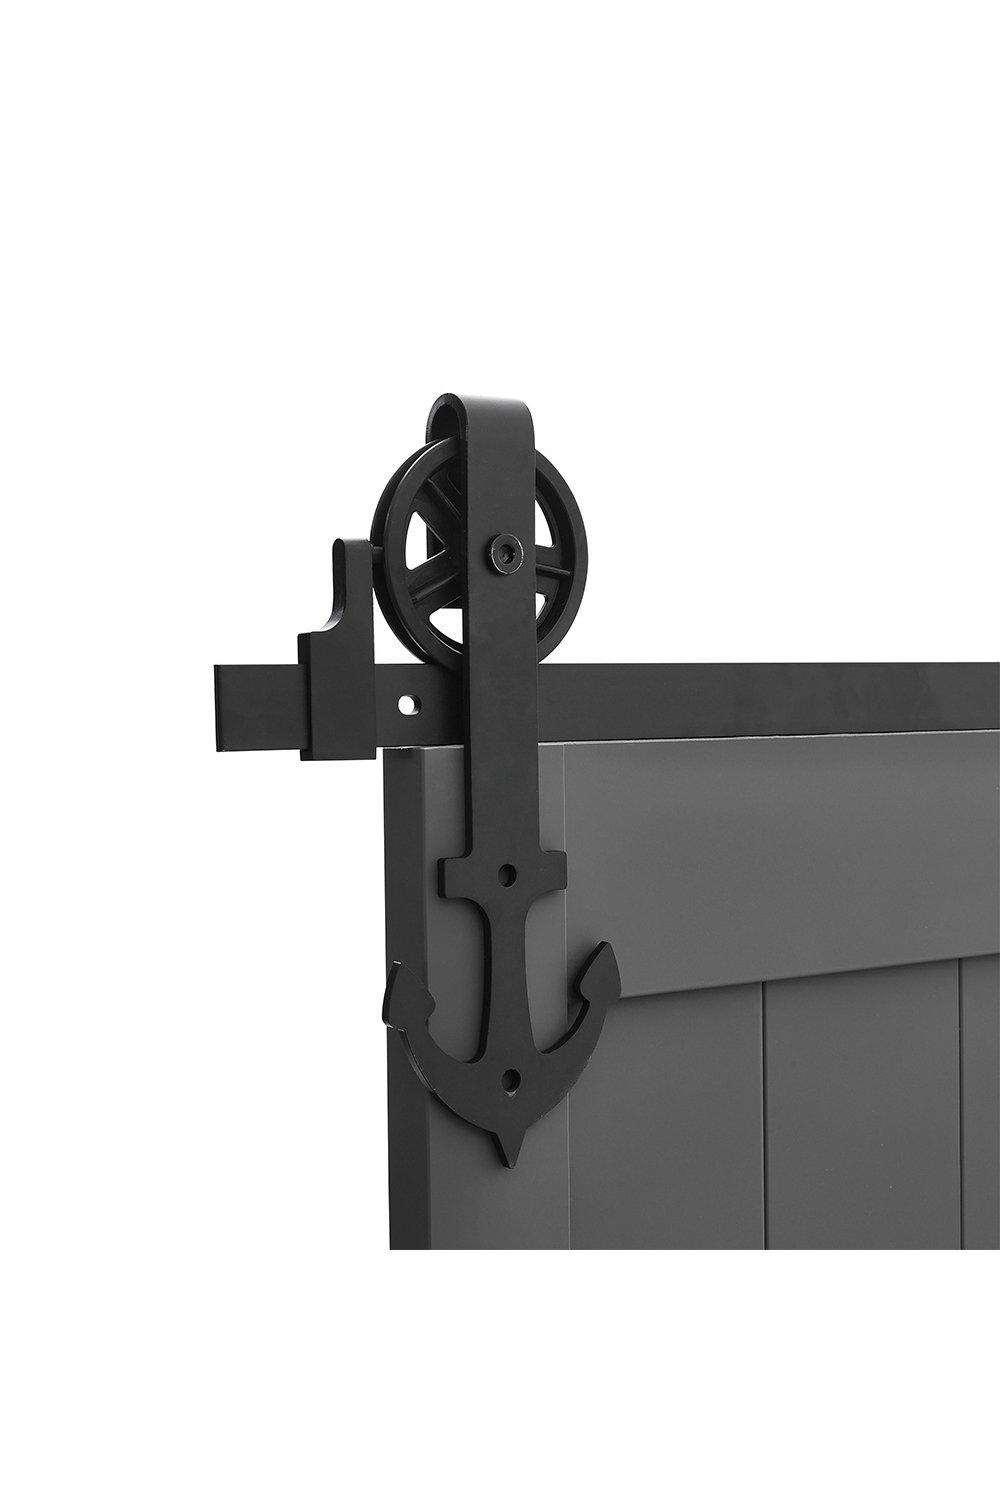 Rustic Anchor Shaped Barn Door Hardware Kit 6ft